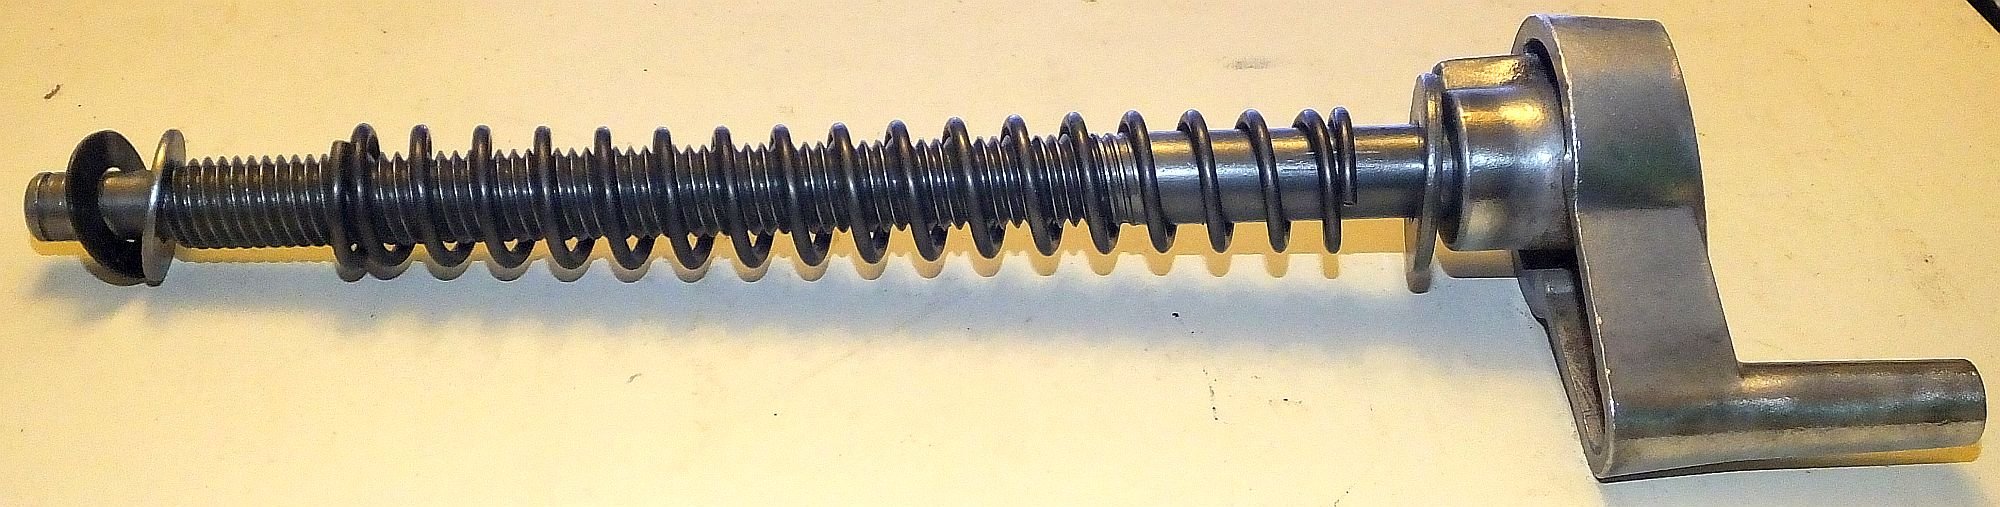 belt tension crank assembled.jpg